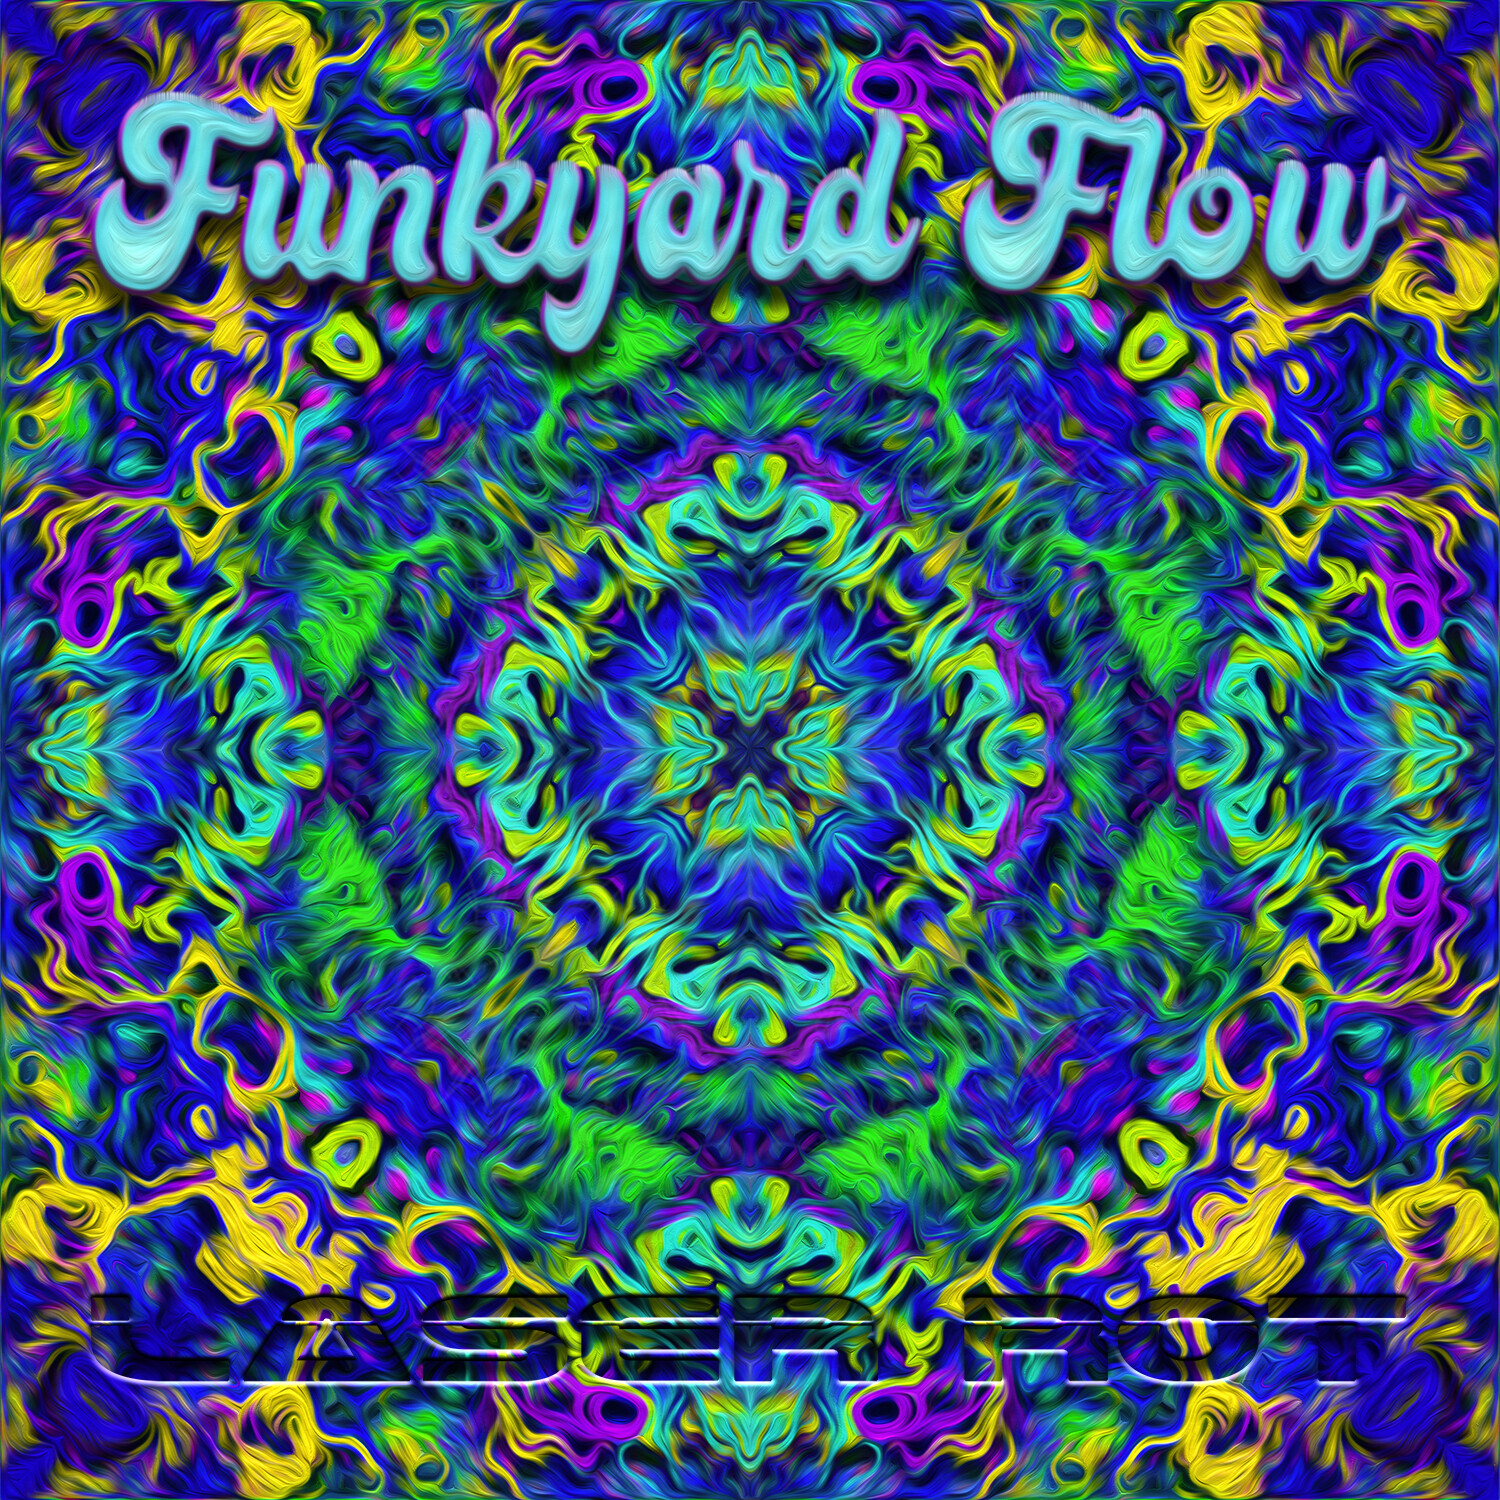 Funkyard Flow (Album Cover Art)